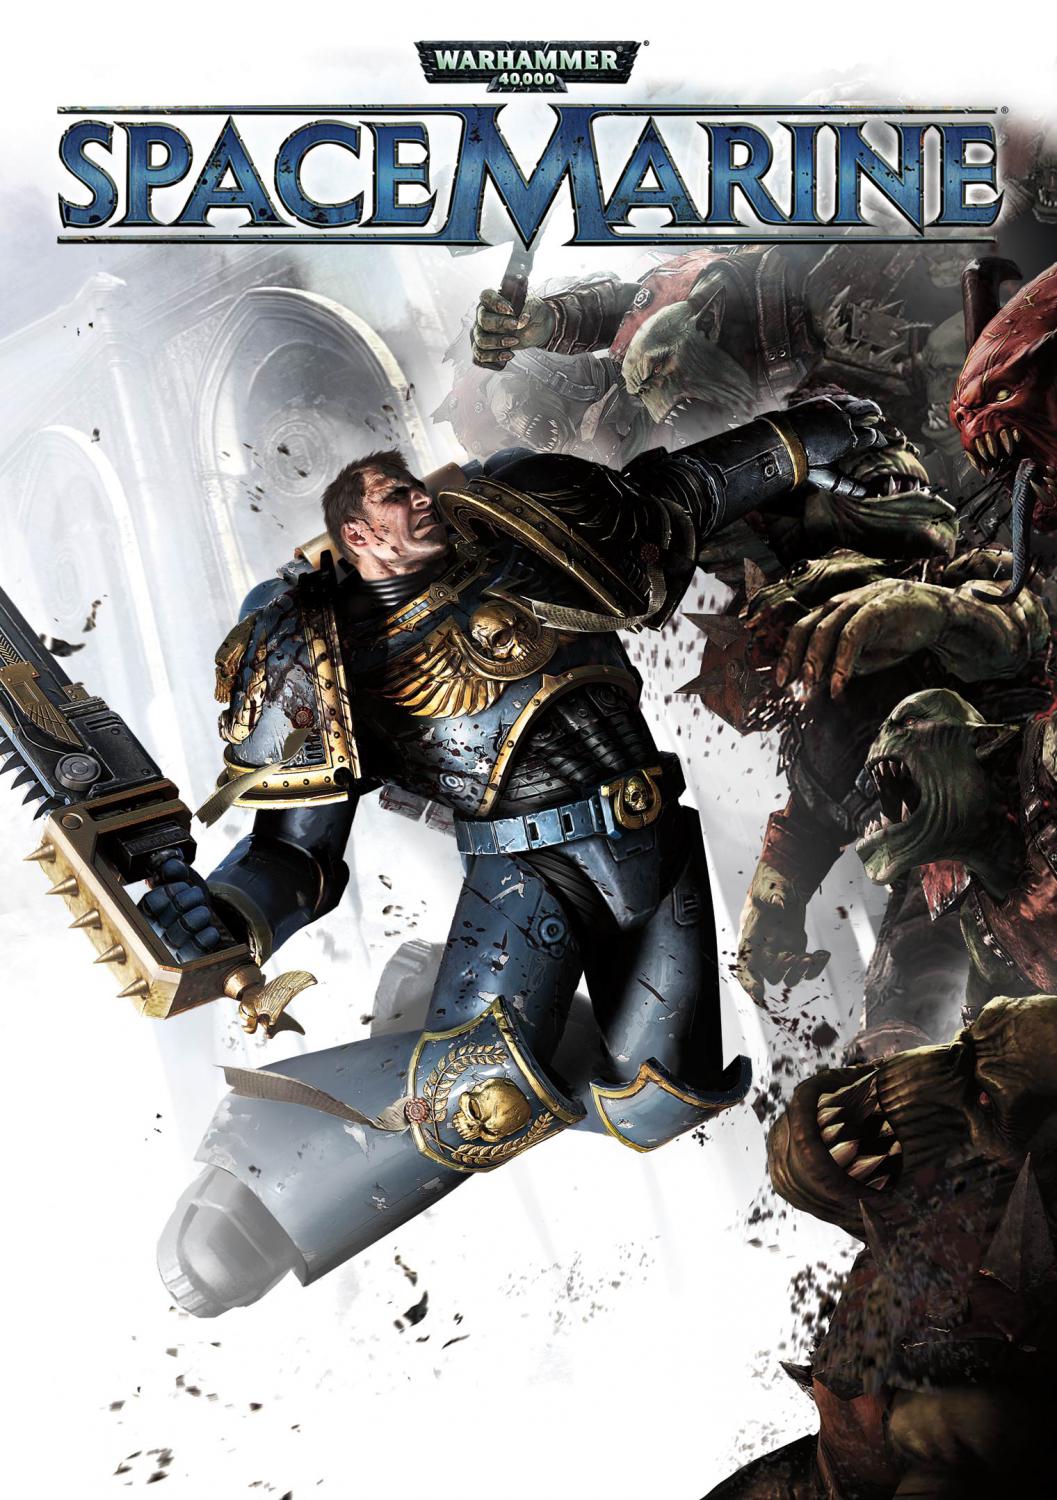 Warhammer® 40,000®: Space Marine®: Death Guard Champion Chapter Pack DLC